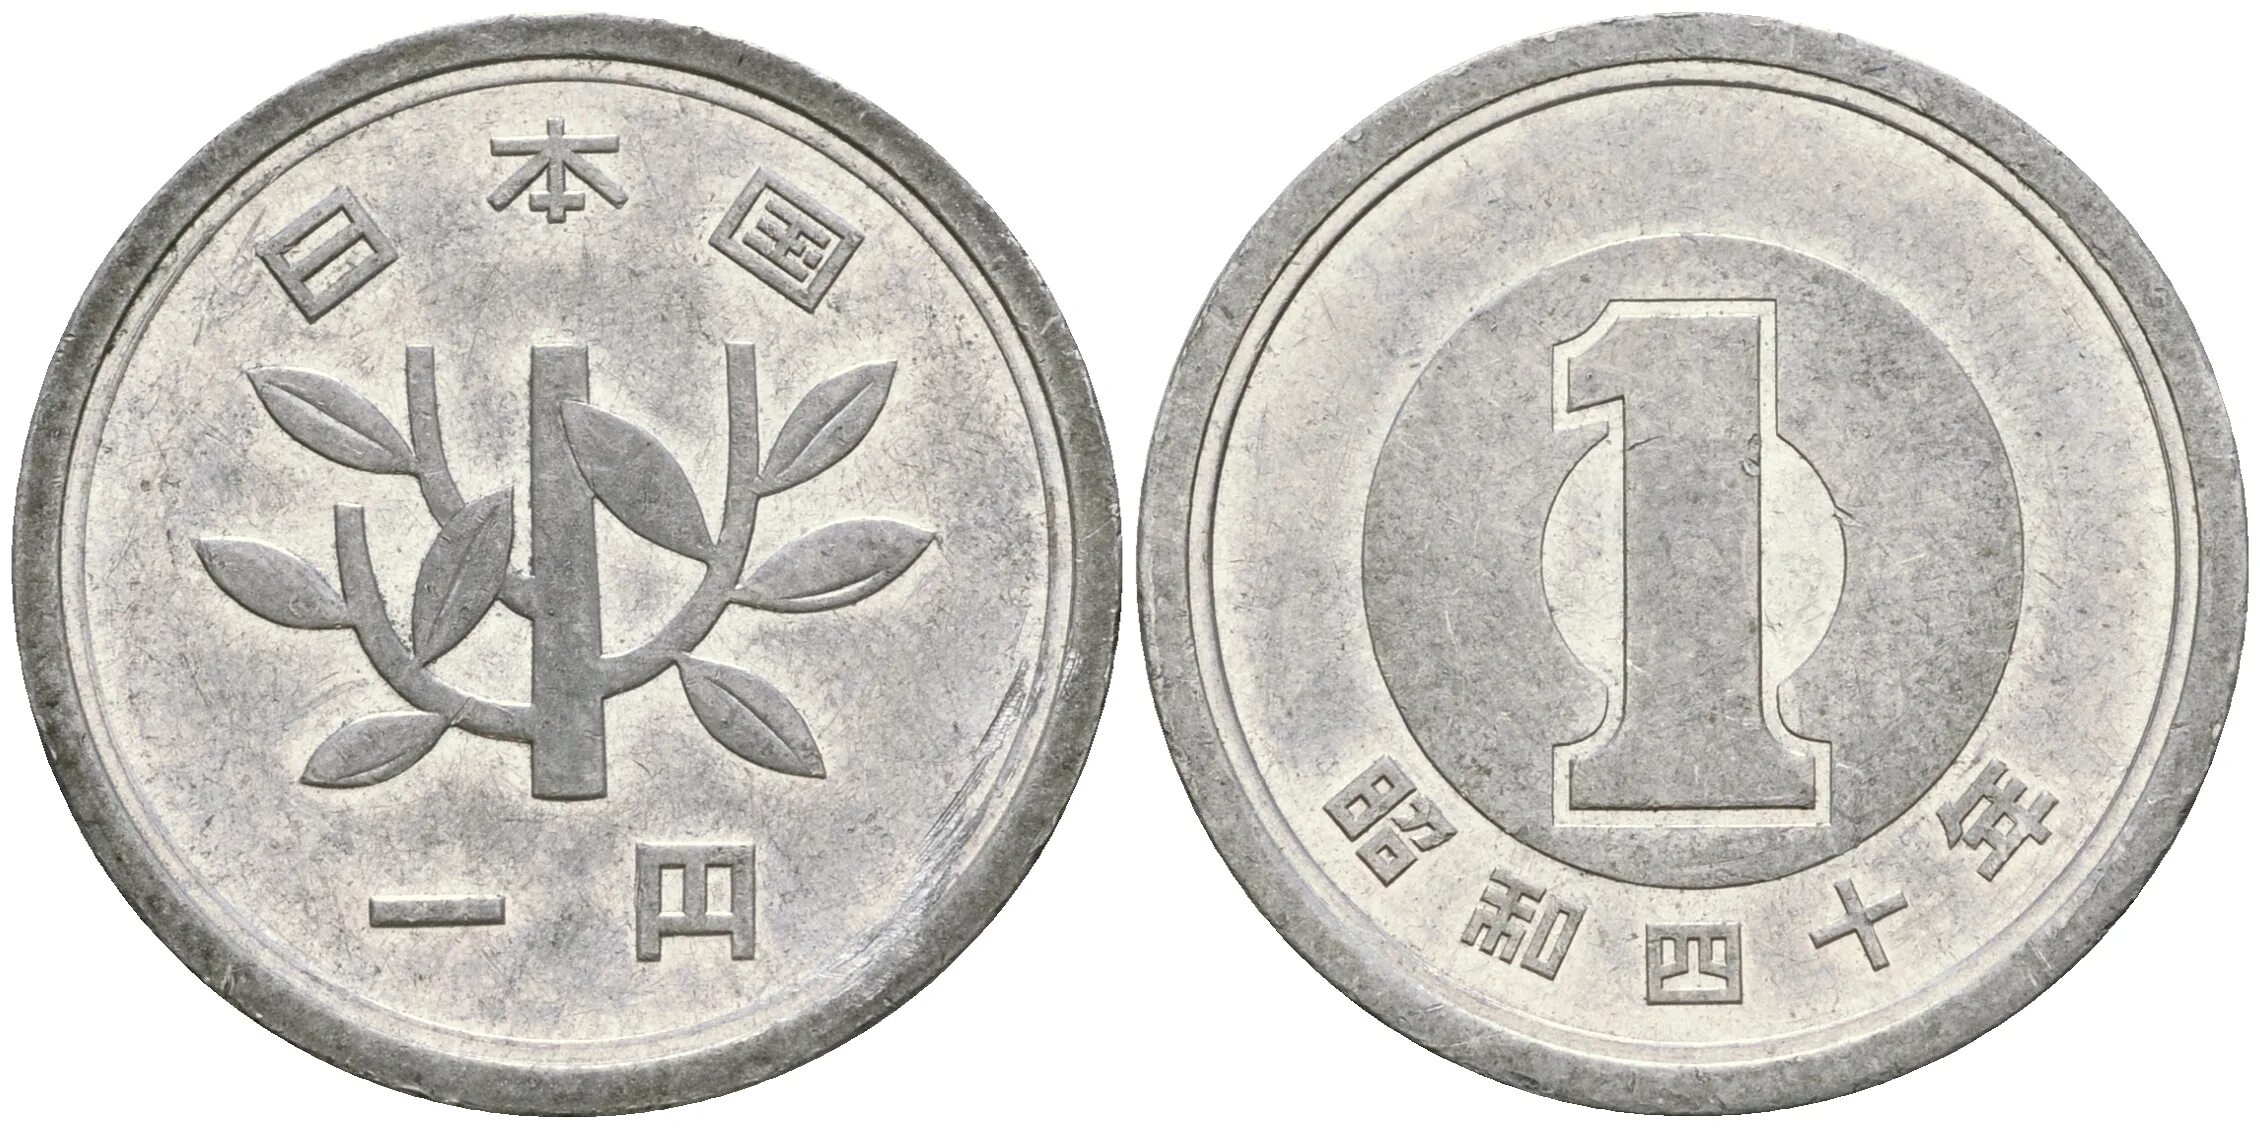 First coins. Монета 1 йена Япония. Монета Япония 1 йена 1989. 1 Йена 1955-1989 Япония. Монета Япония 1 йена 1994.